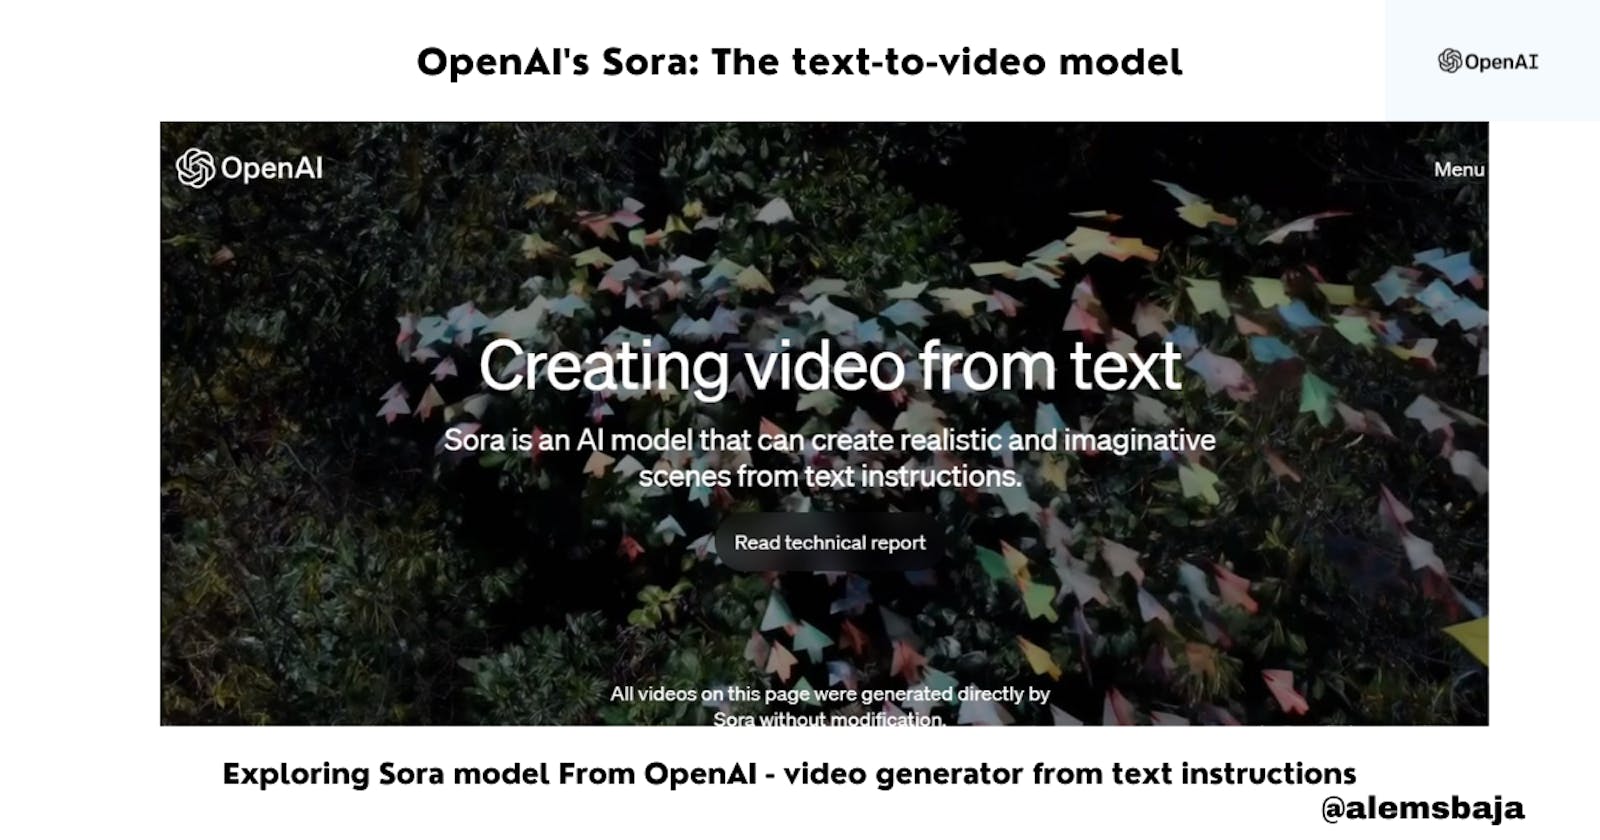 OpenAI's Sora: The text-to-video model